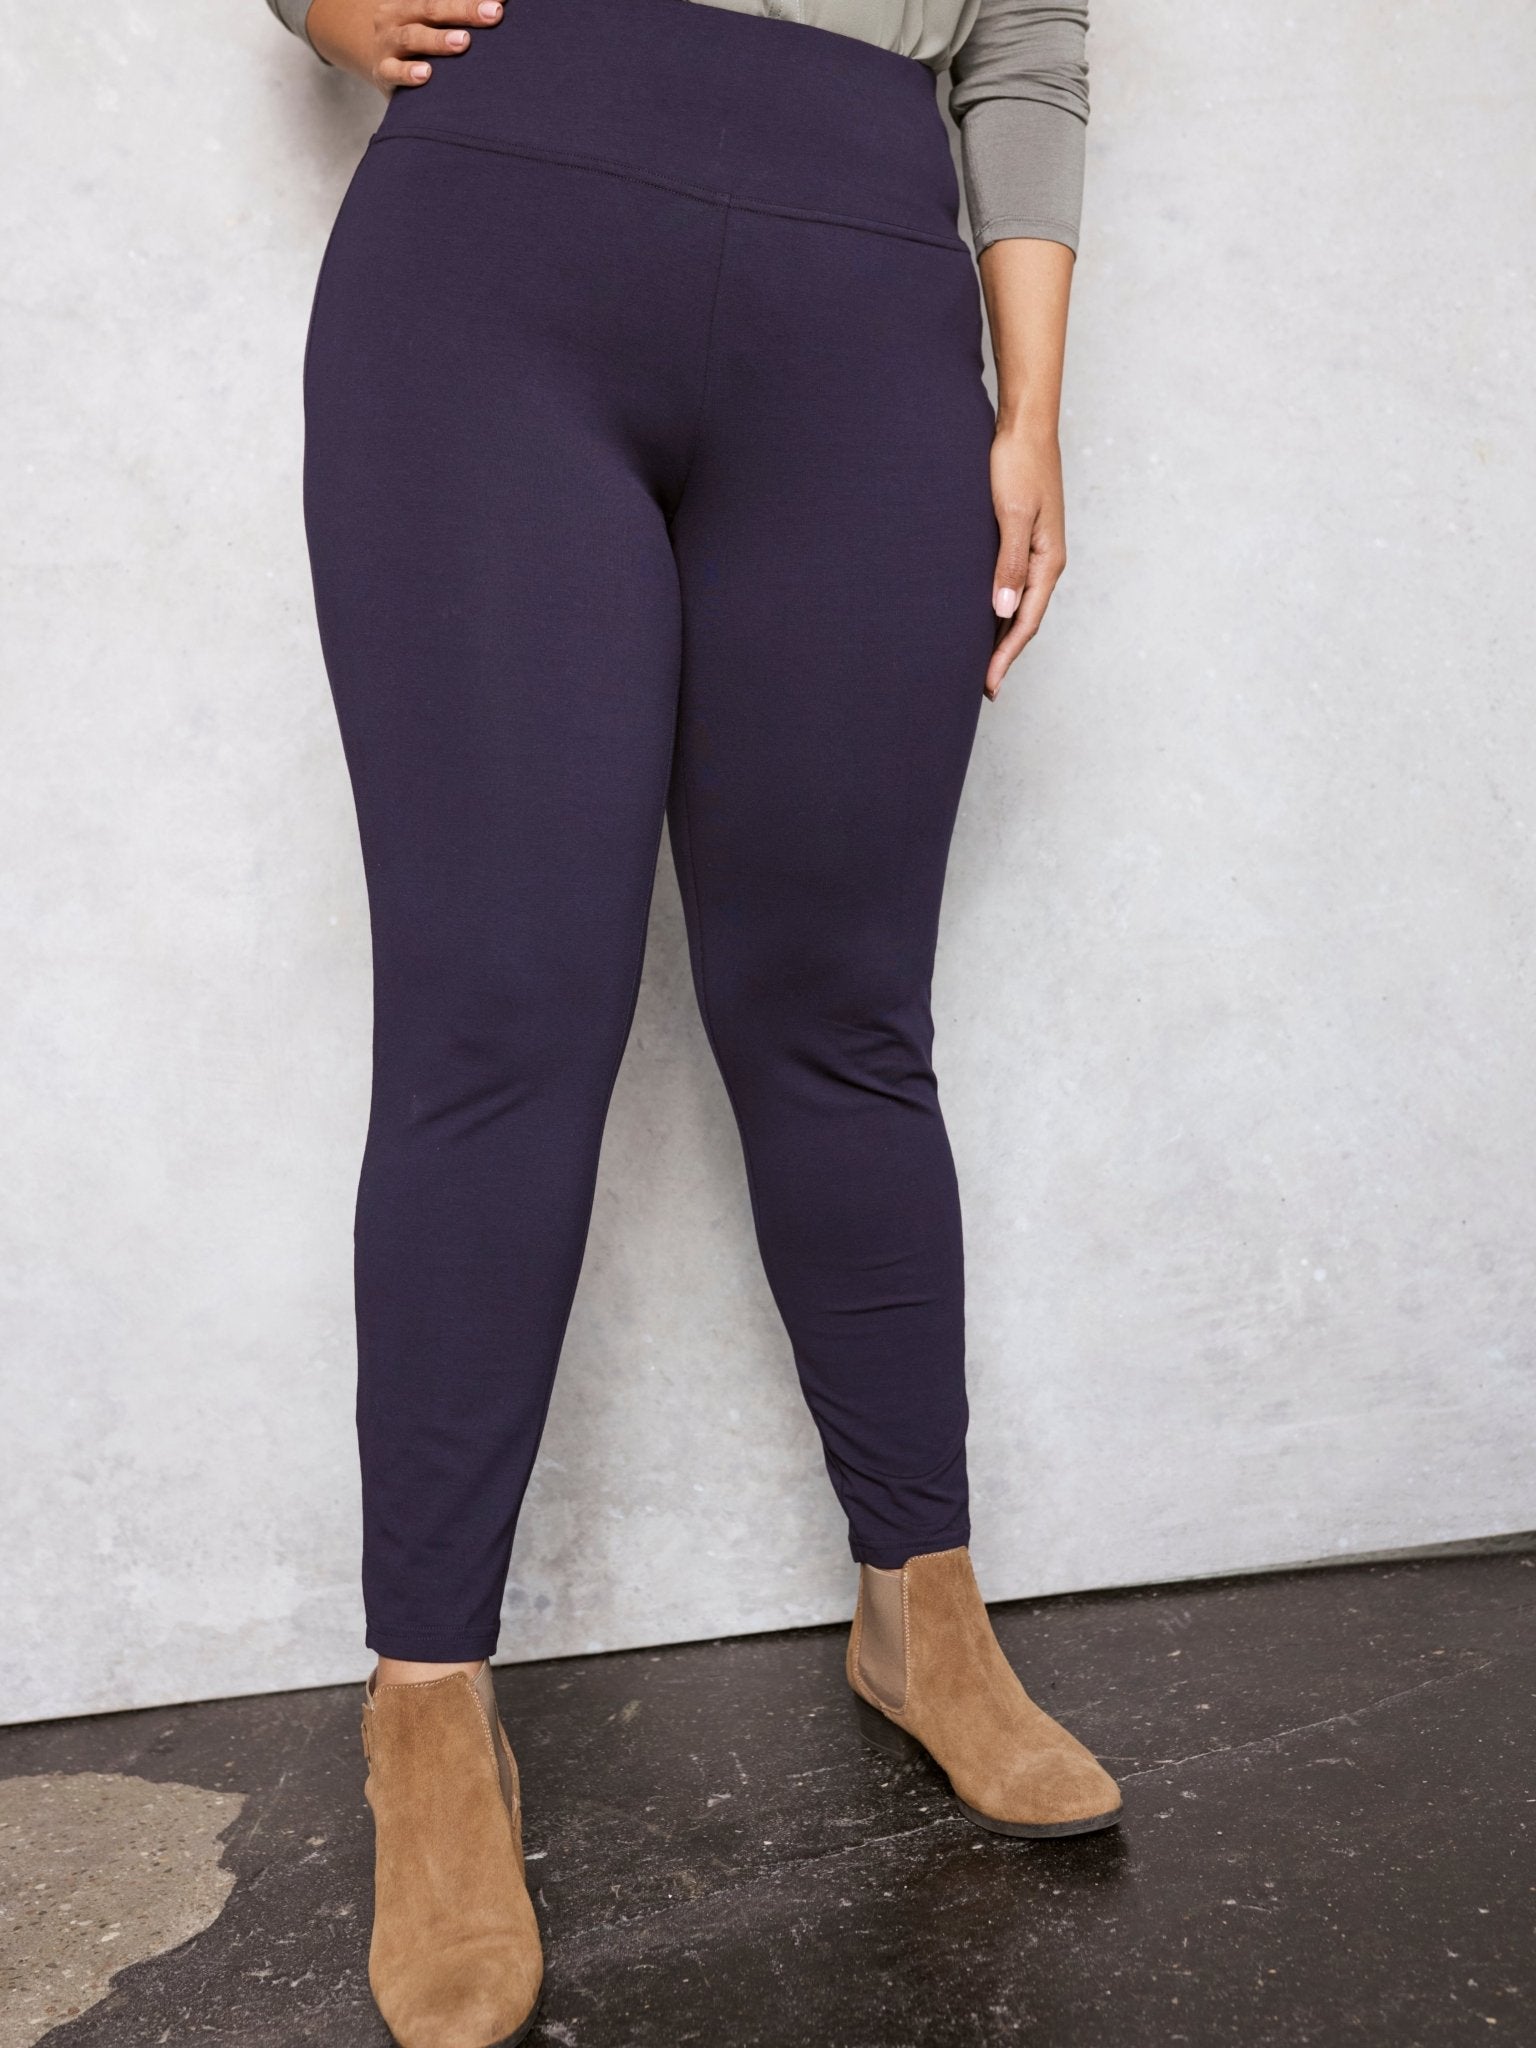 Dressbarn Roz & Ali Women's Plus Size Tummy Control Leggings - Black, 2x :  Target